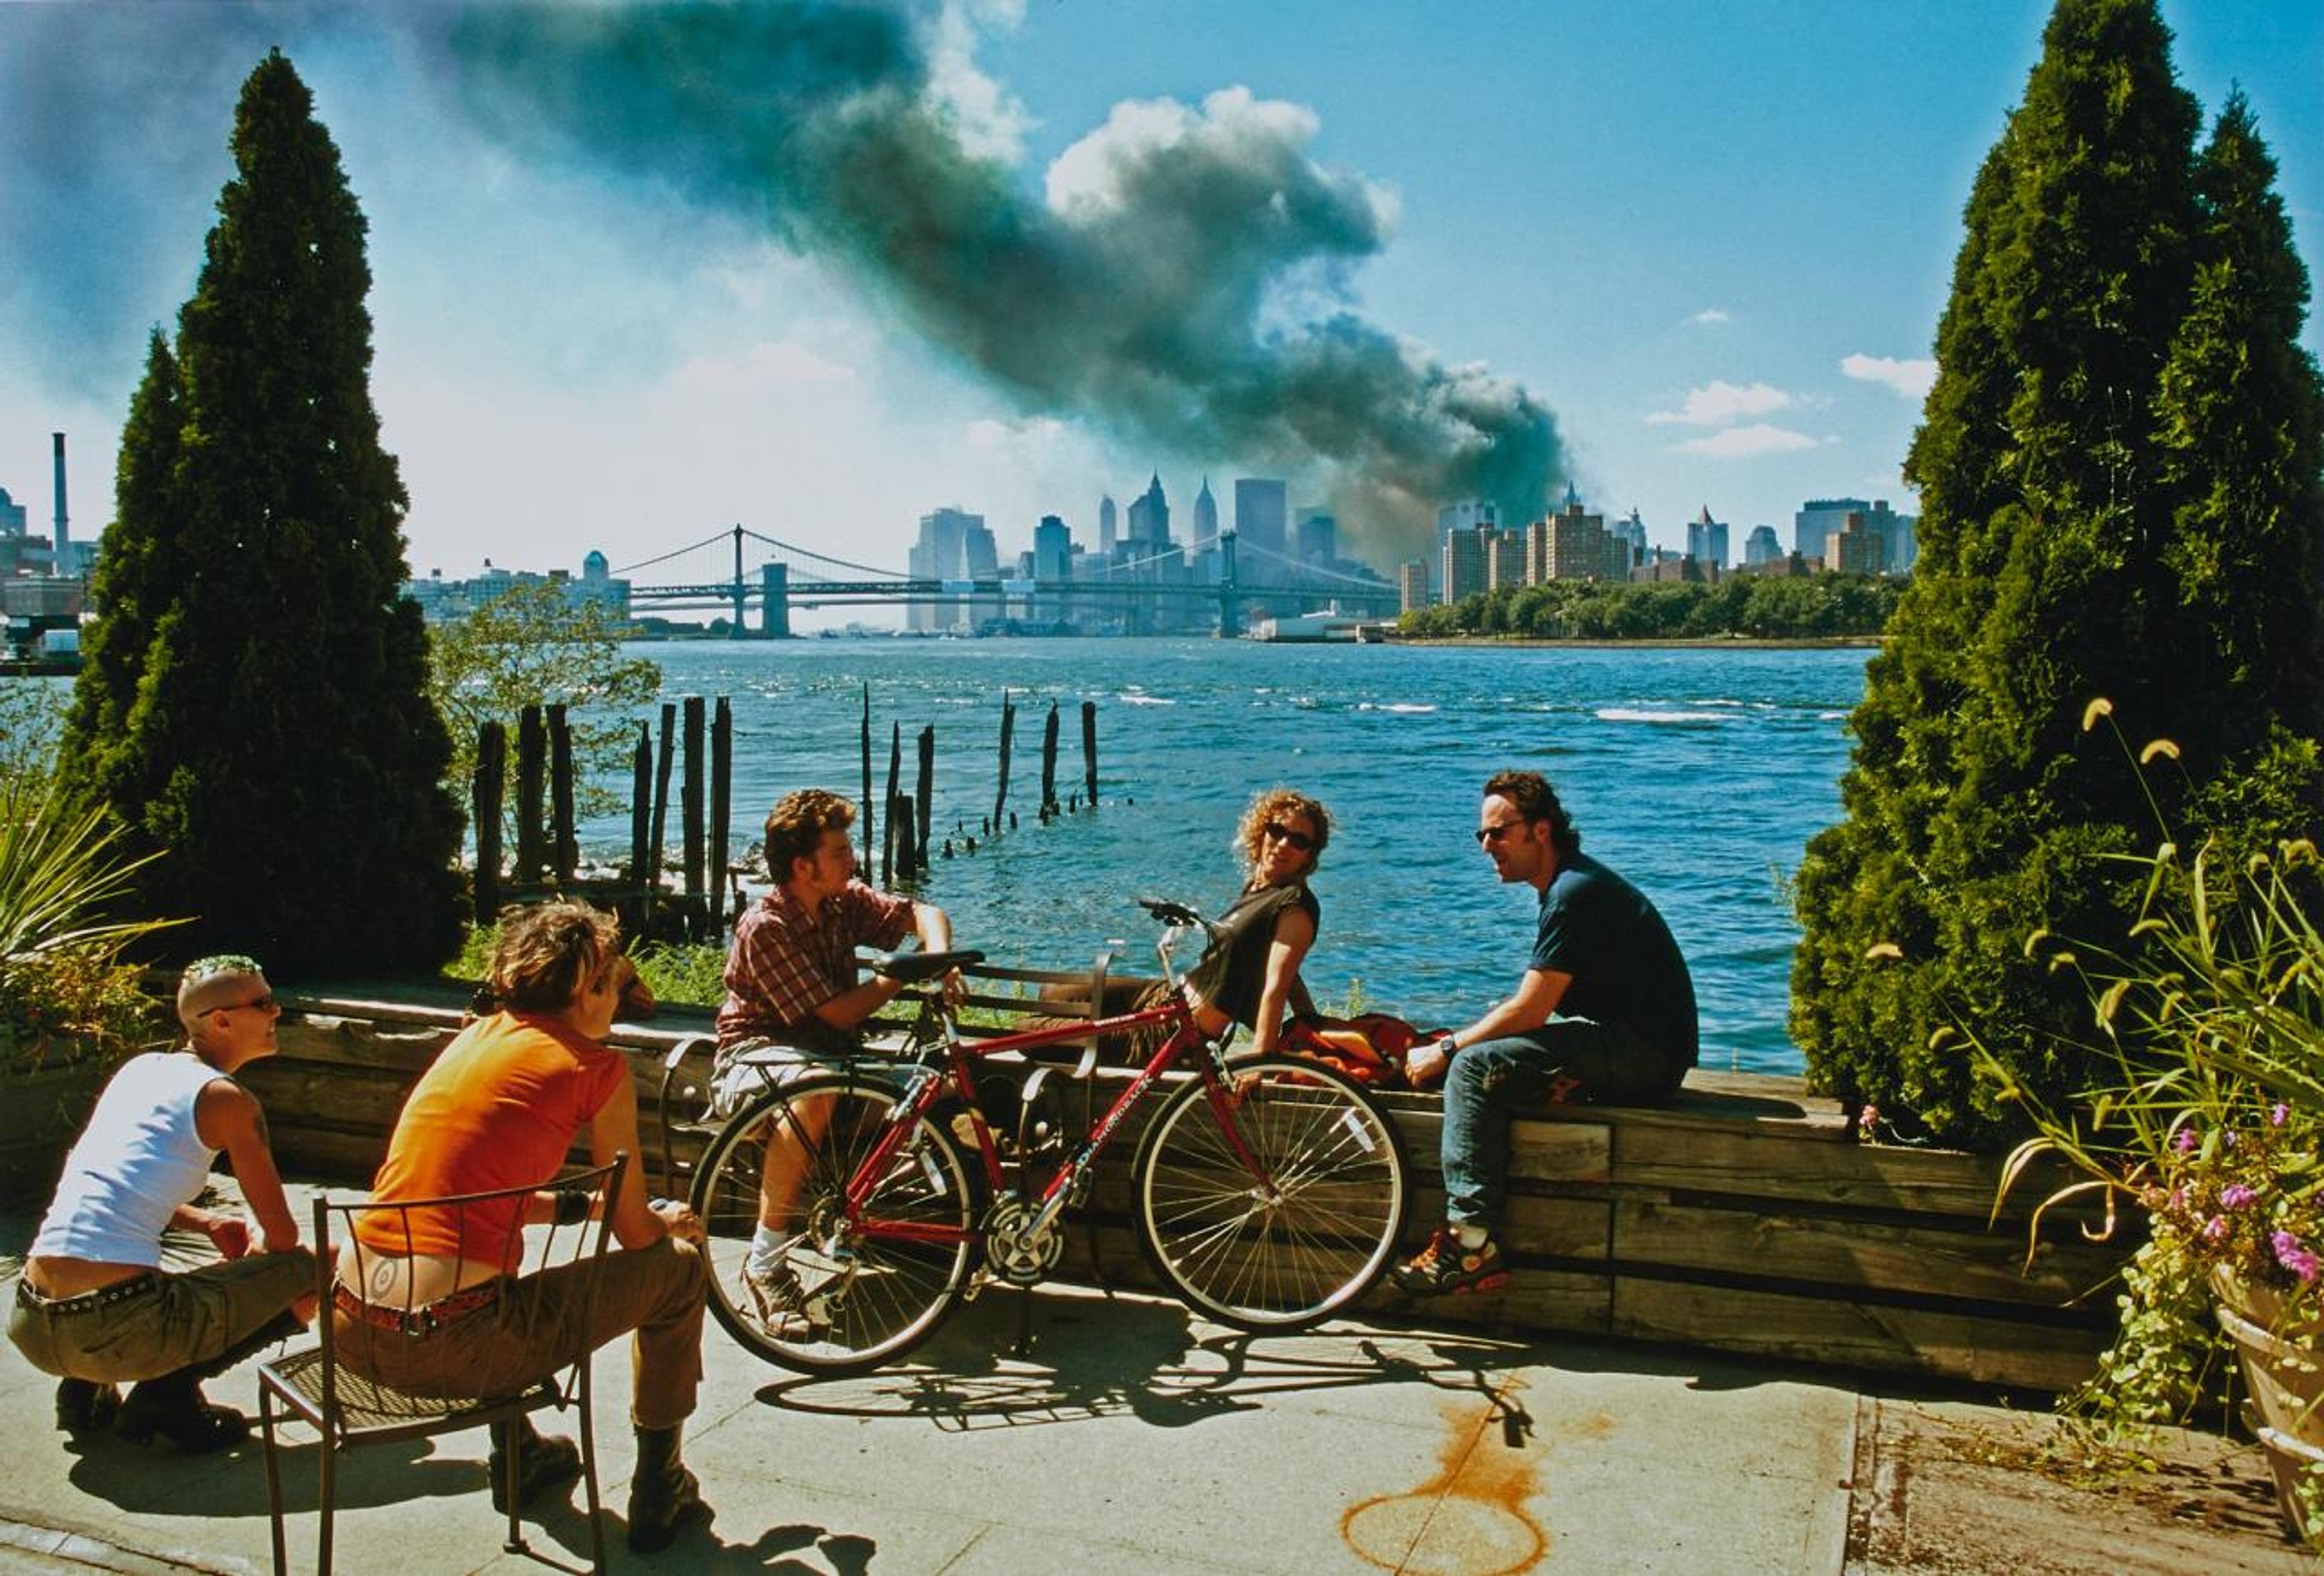 Thomas Höpker, View from Williamsburg, Brooklyn, on Manhattan, 9/11, 2001